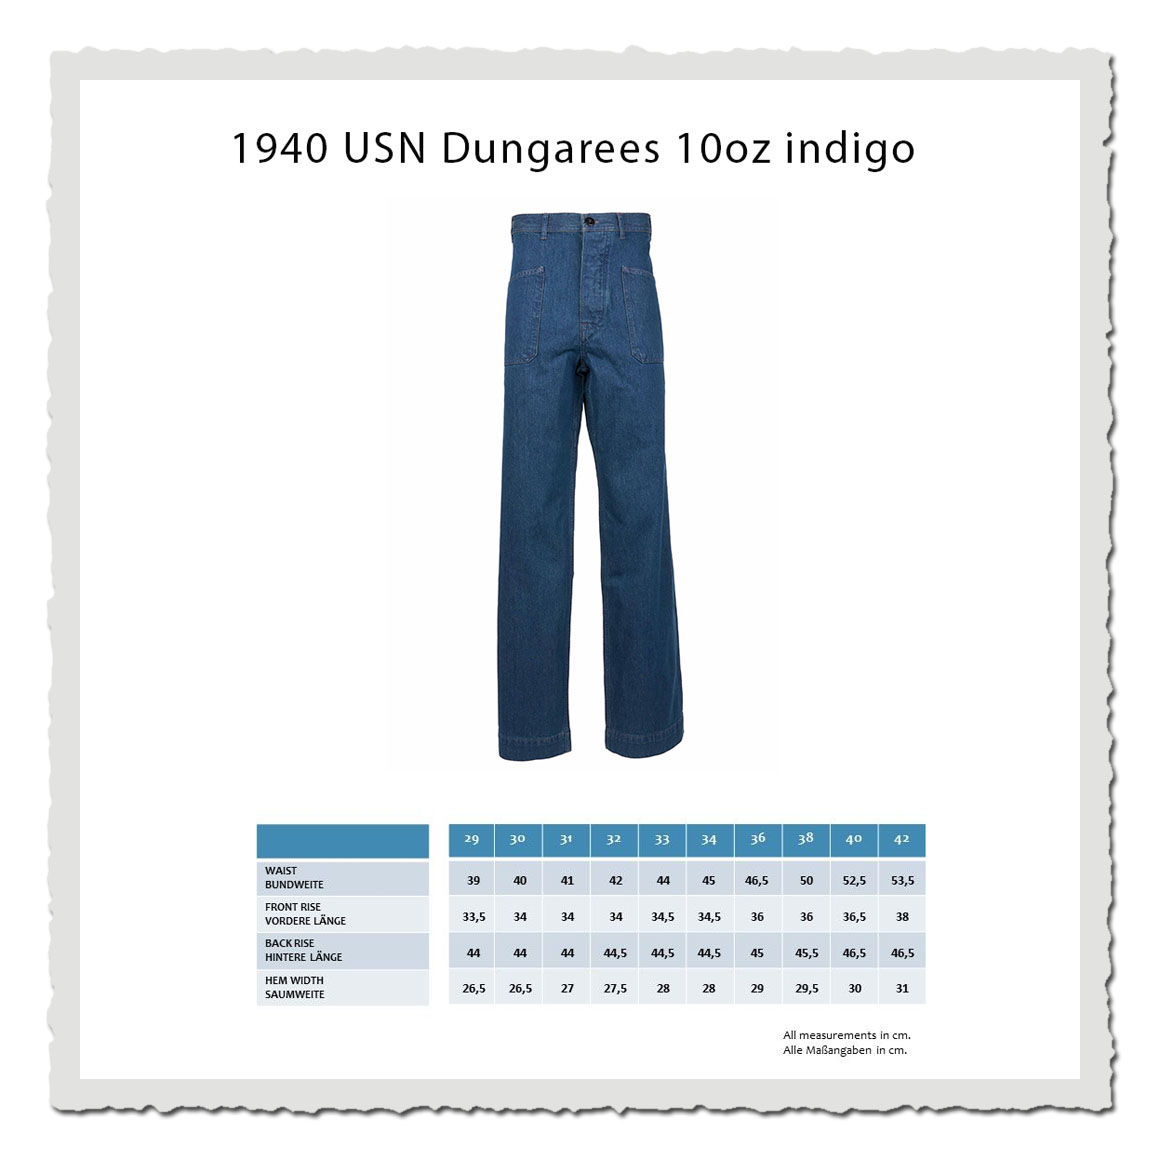 1940 USN Dungarees 10oz indigo